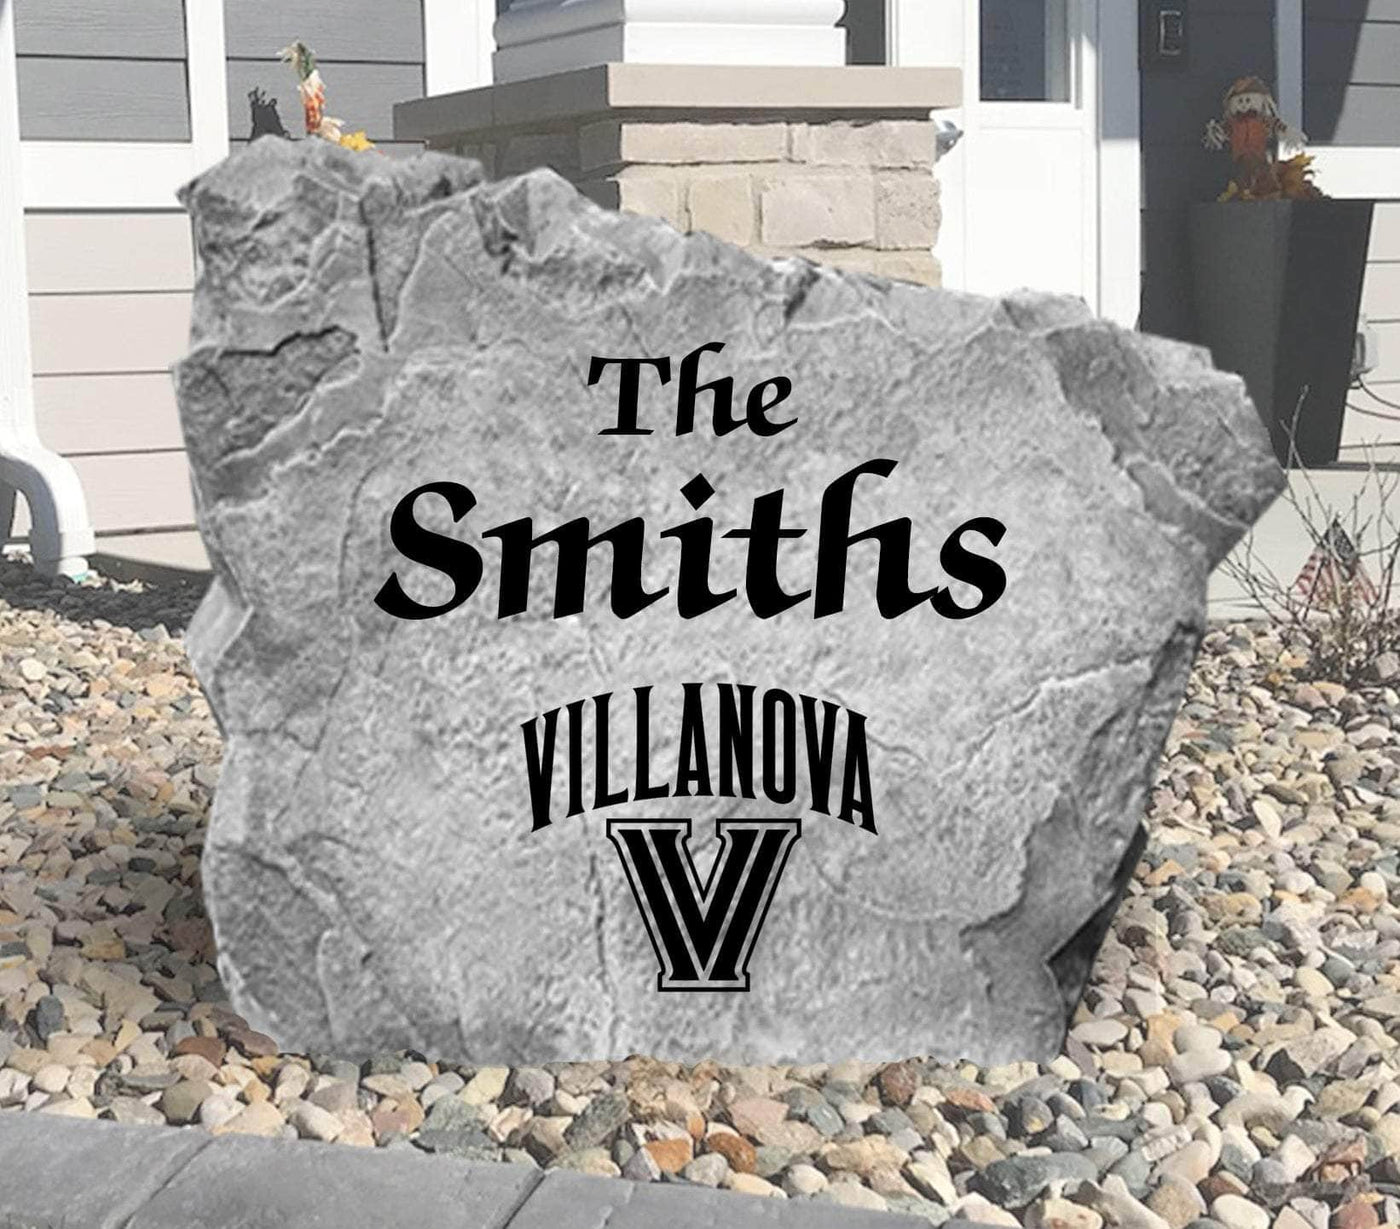 Villanova University Name Stone